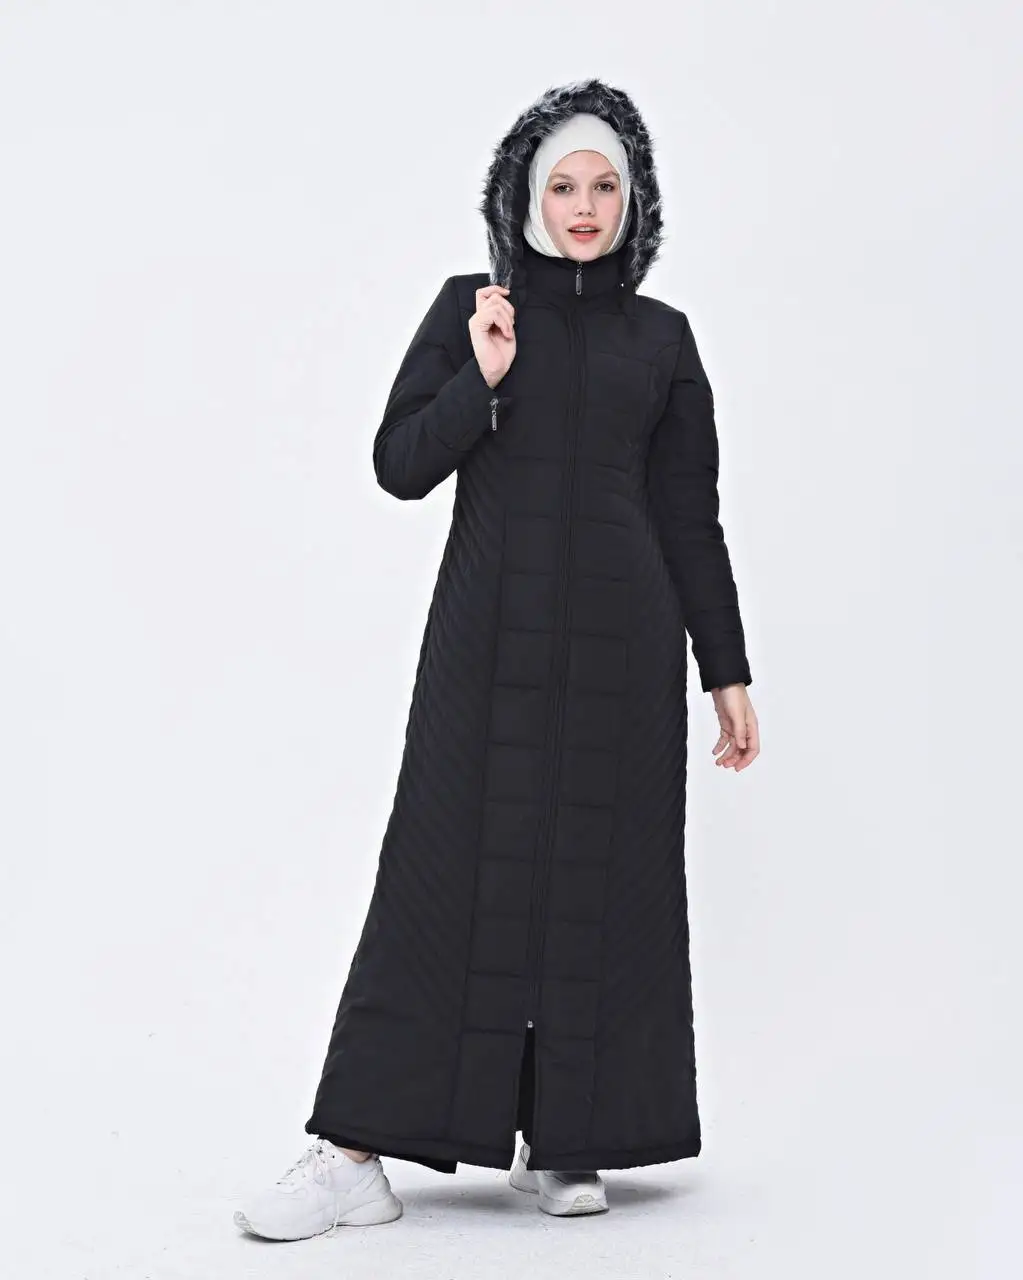 Women Long Topcoat for Winter, Rainproof Fiber Lined Microfiber Fabric,Hidden Pocket on the Side, Removable Hood,Zippered Front